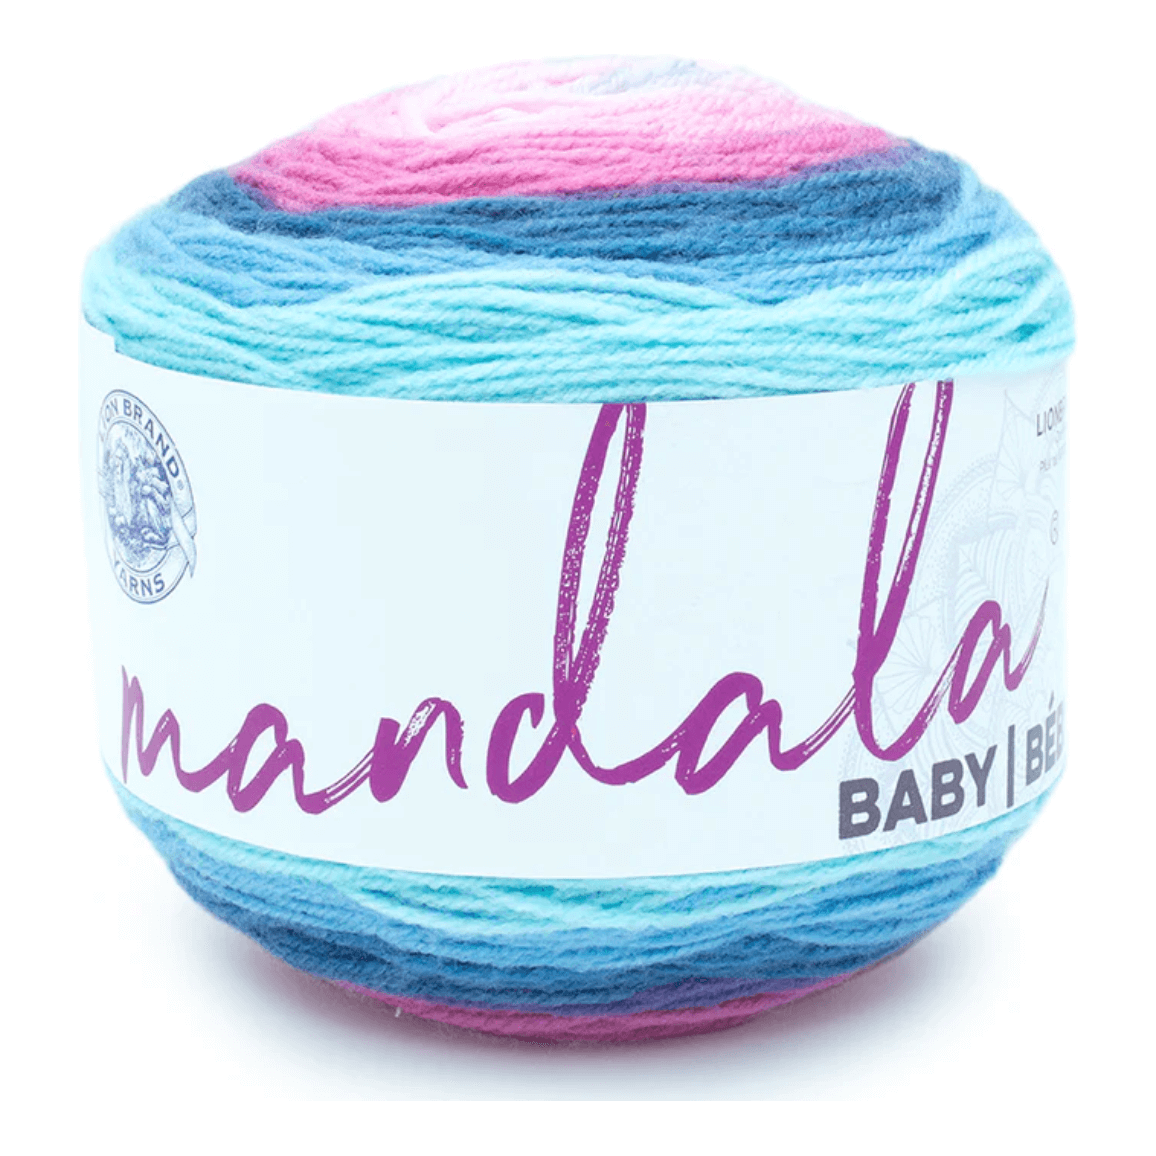 Lion Brand Mandala Baby Yarn Sold As A 3 Pack